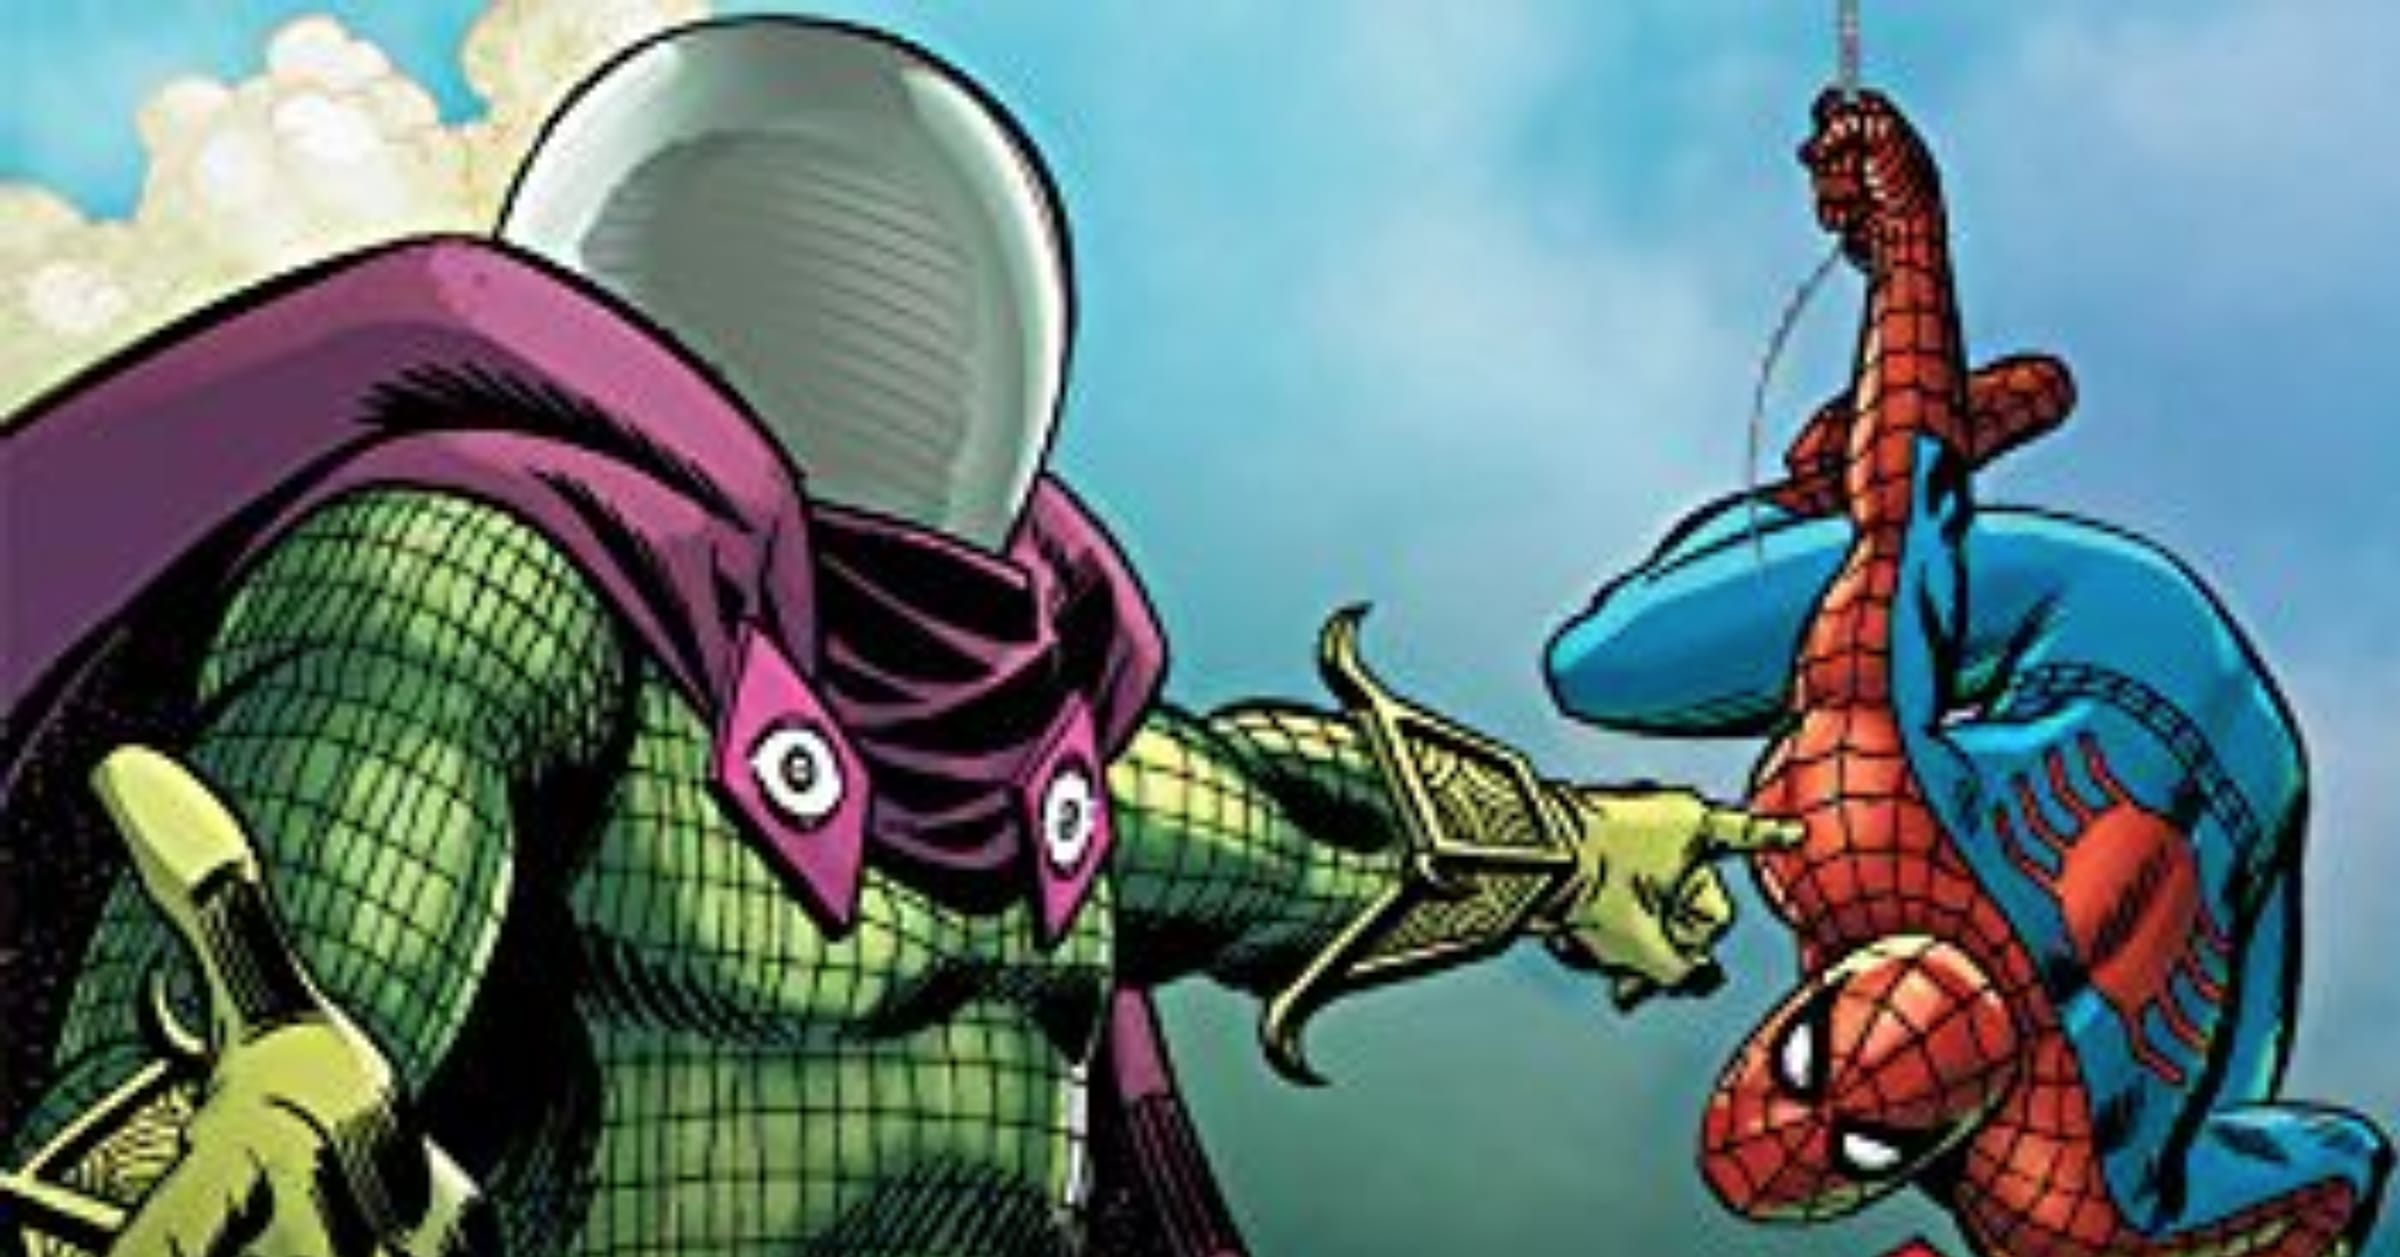 Marvel Comics The Amazing Spiderman Mask Set Iron on Patch